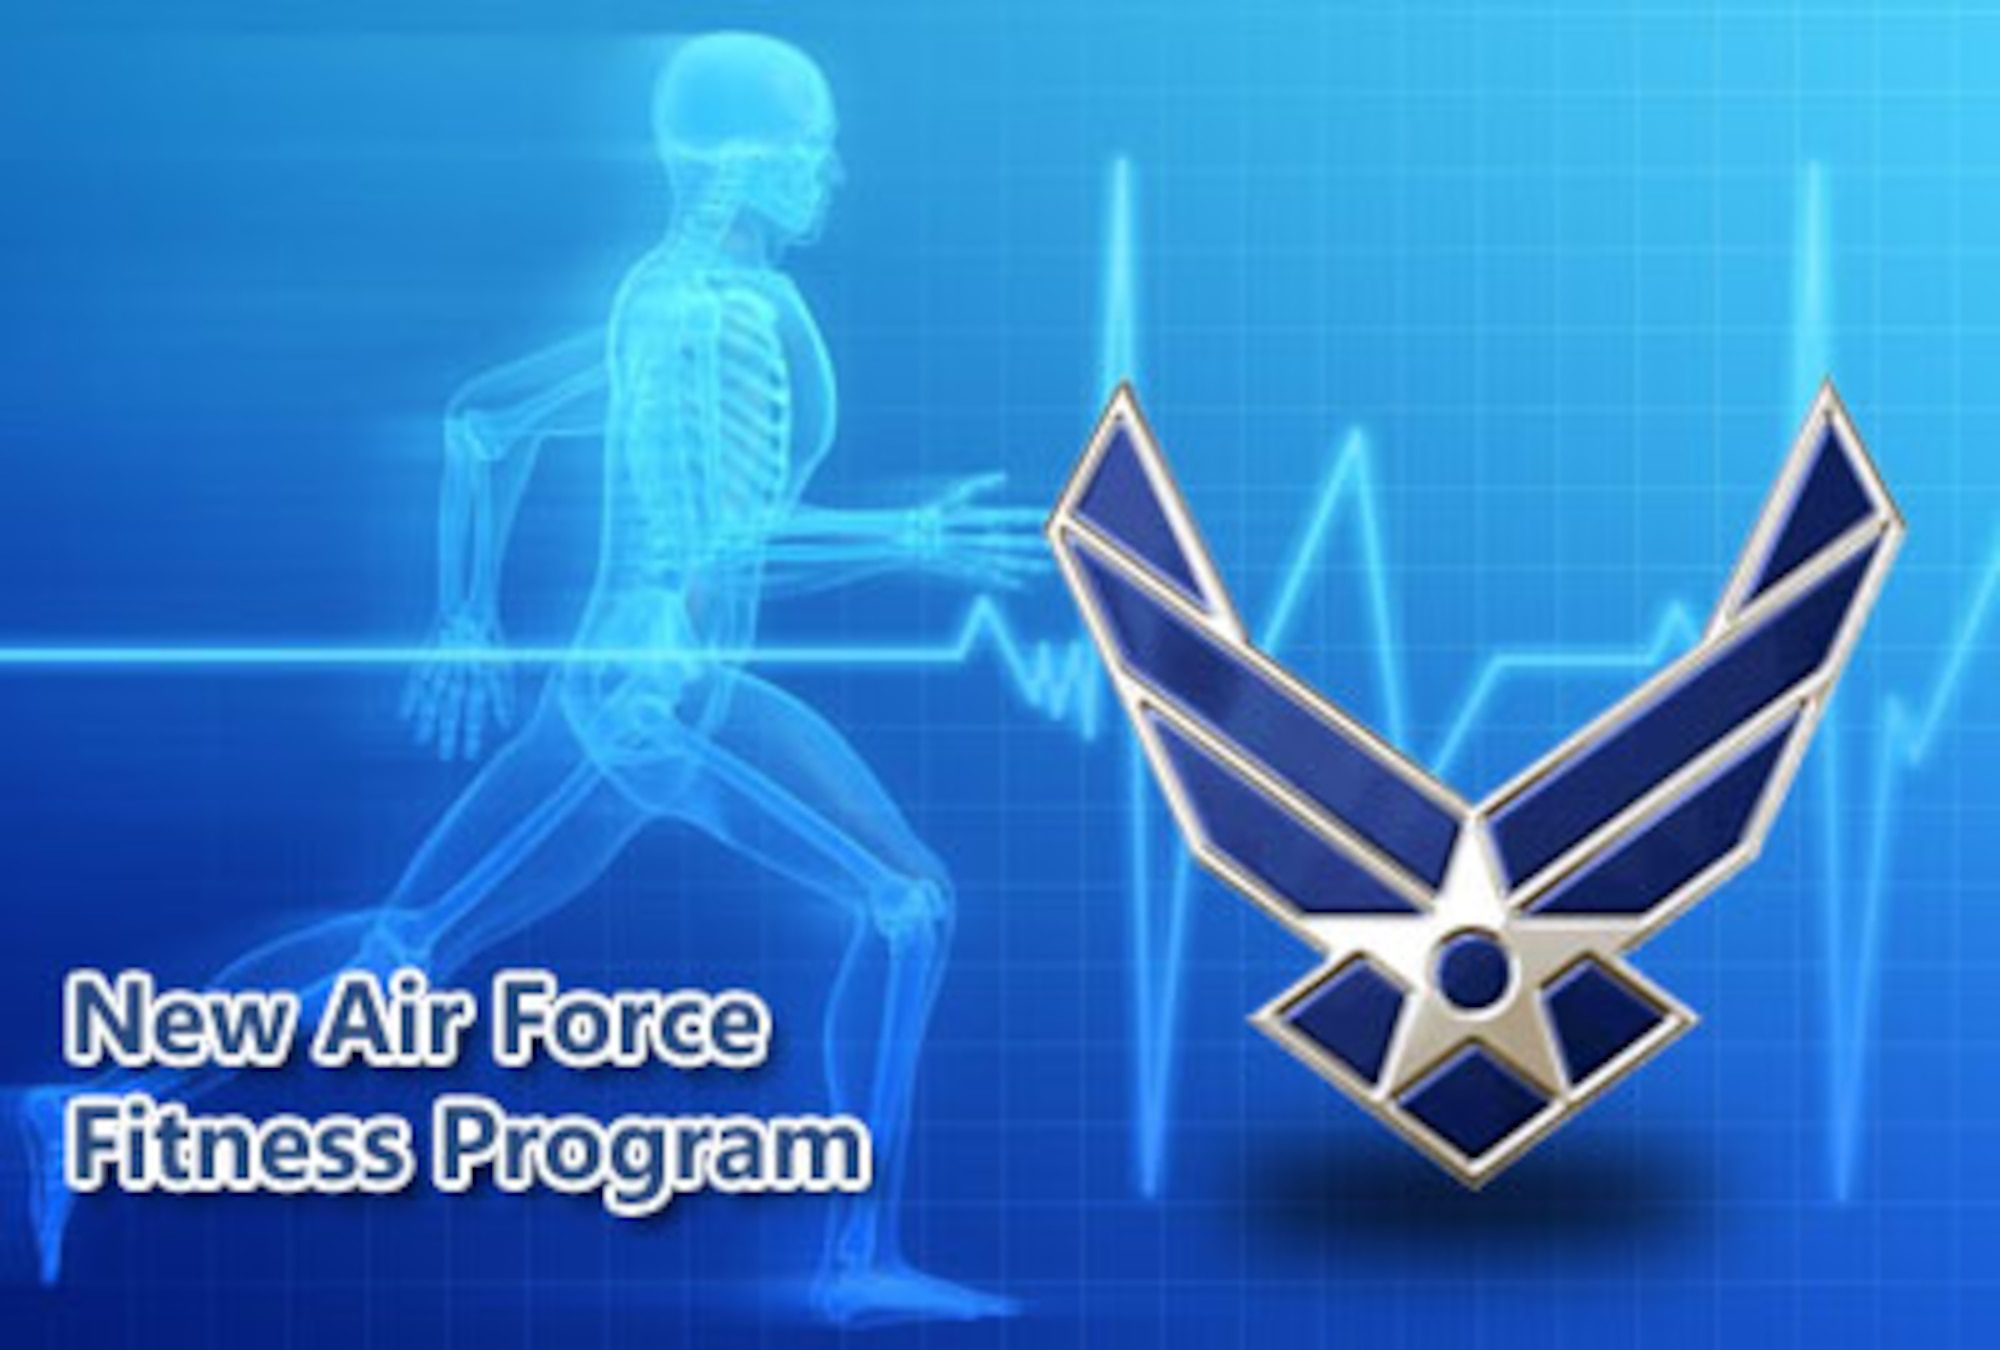 No More Tape Test: Air Force Announces New Body Composition Program